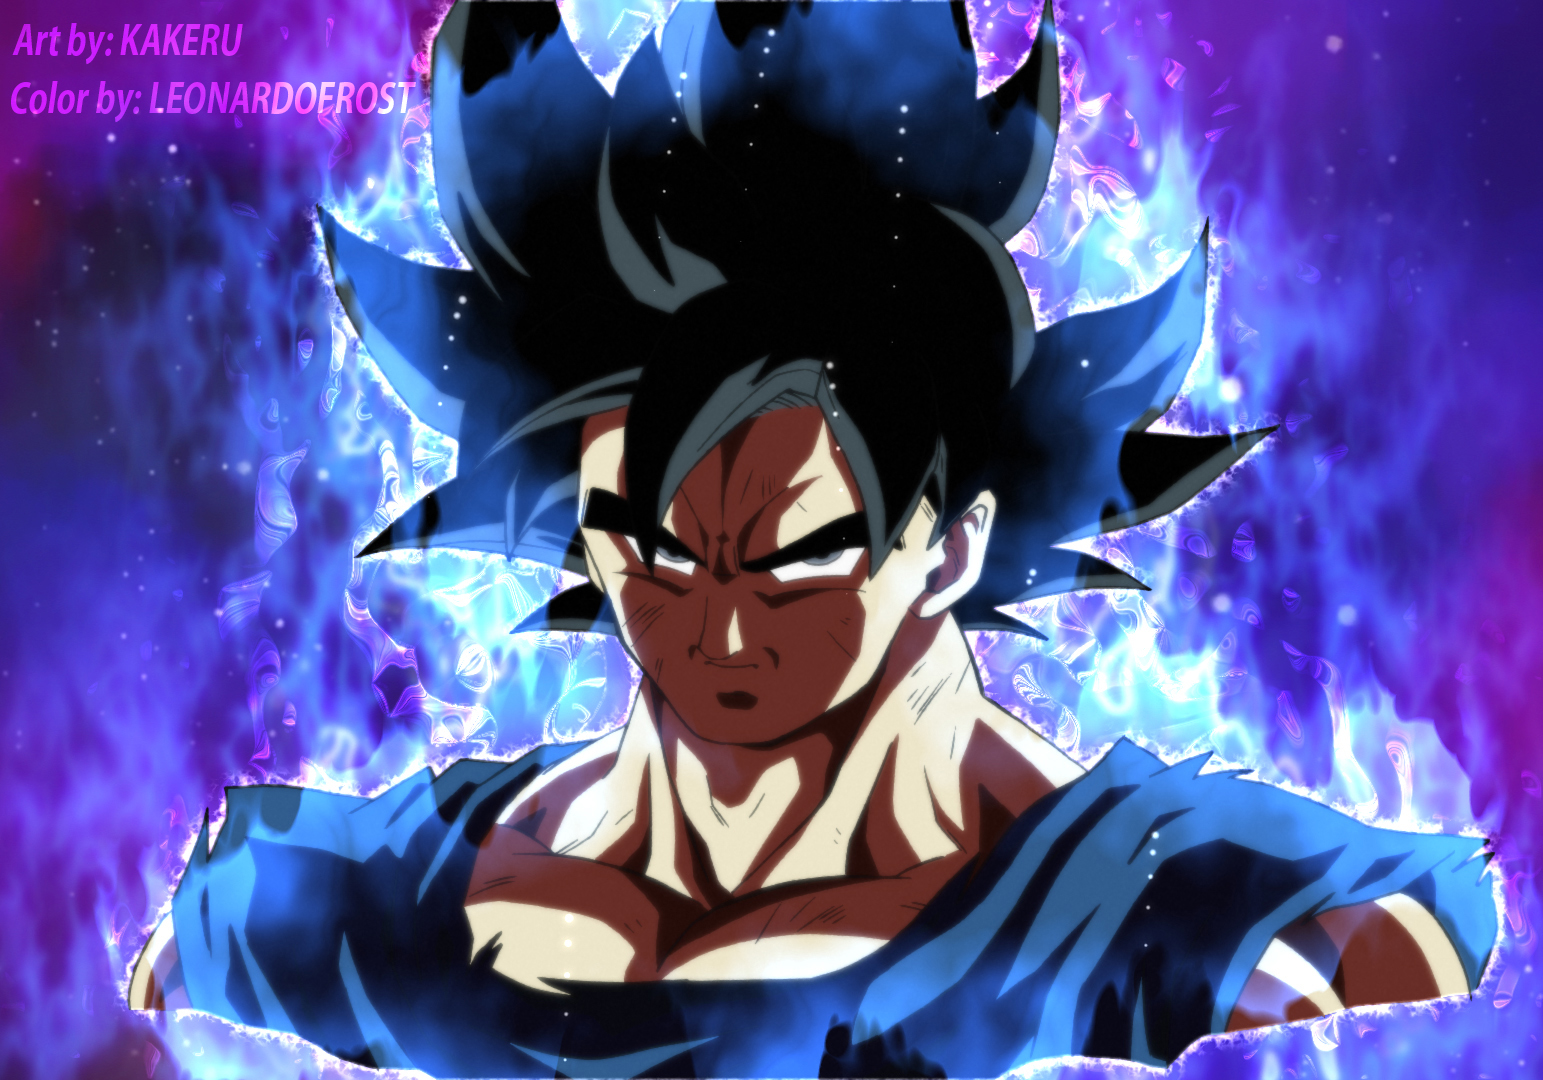 Goku ULTRA INSTINCT MASTERED by AlejandroDBS on DeviantArt